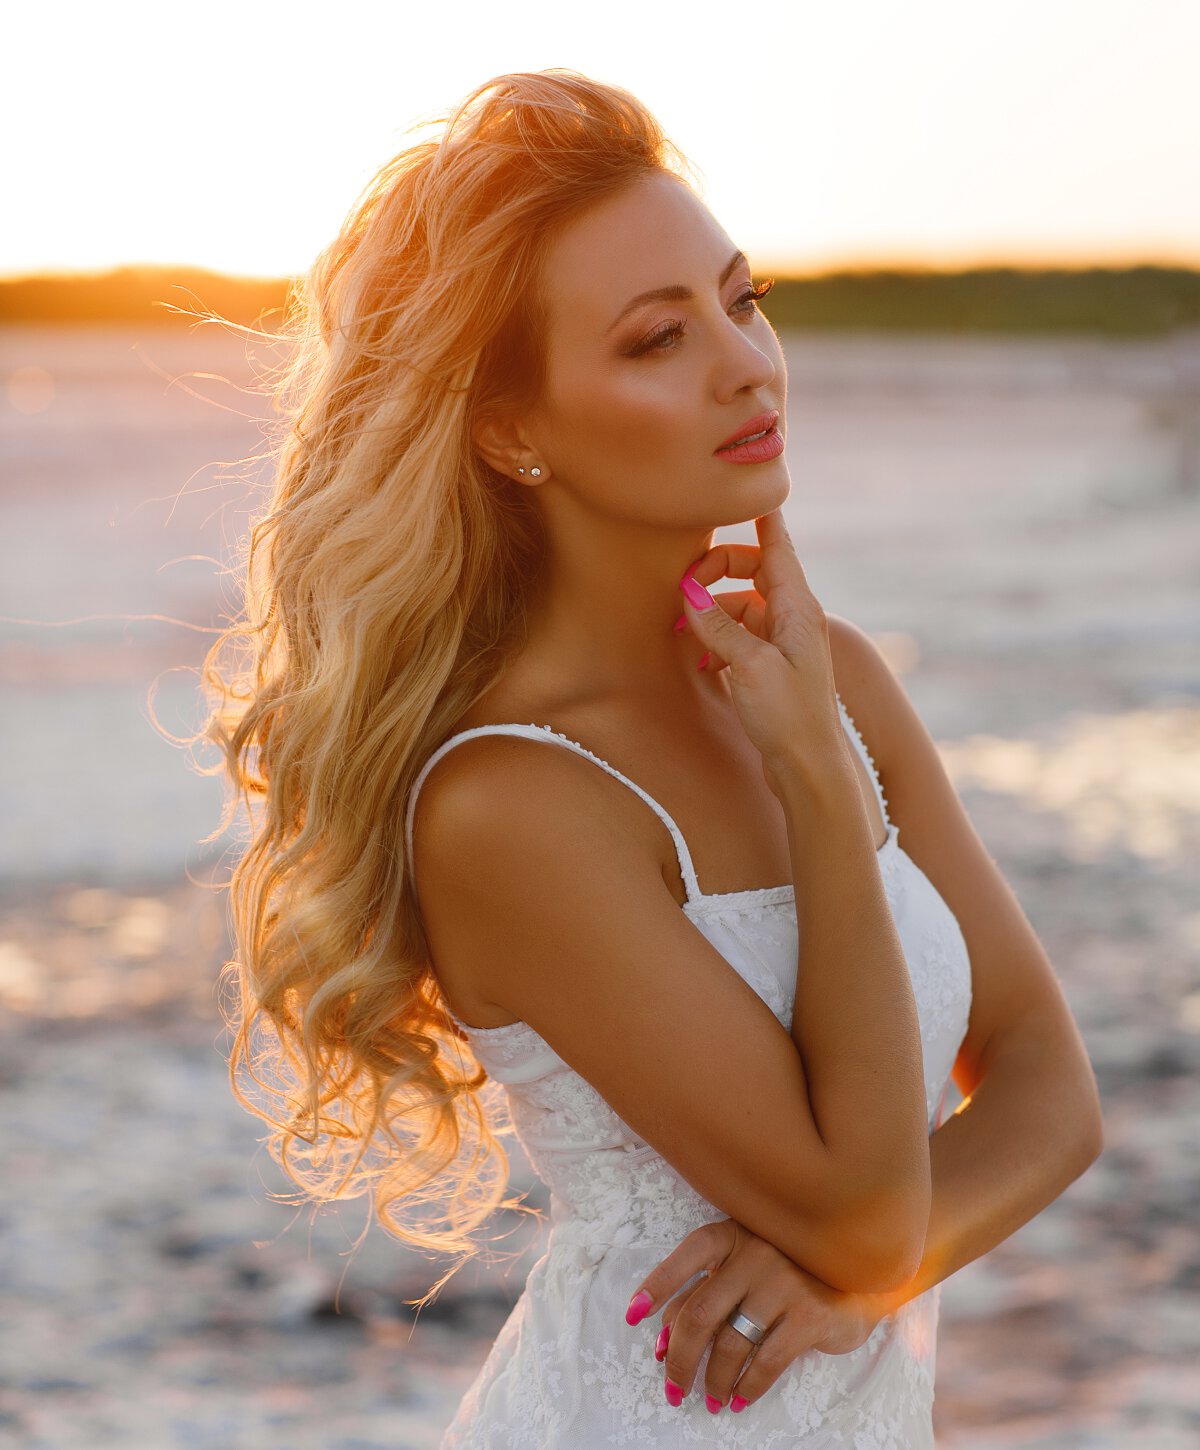 Carolina ximmer z wave model with blonde hair